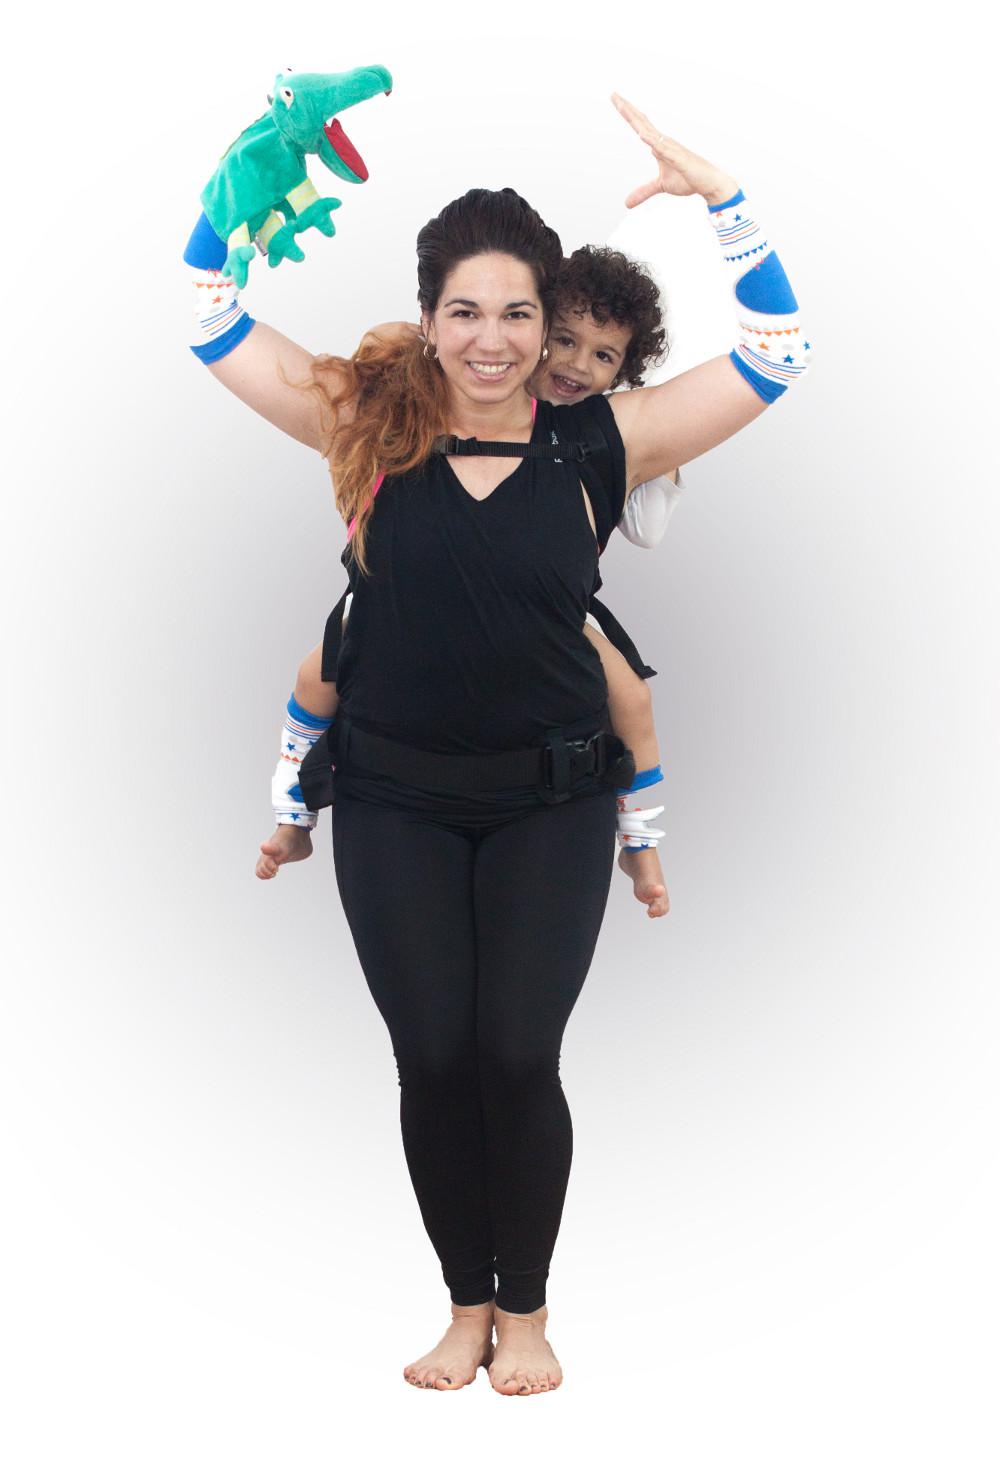 Kanga-Trainerin Rosana mit ihrem Kind in der Manduca